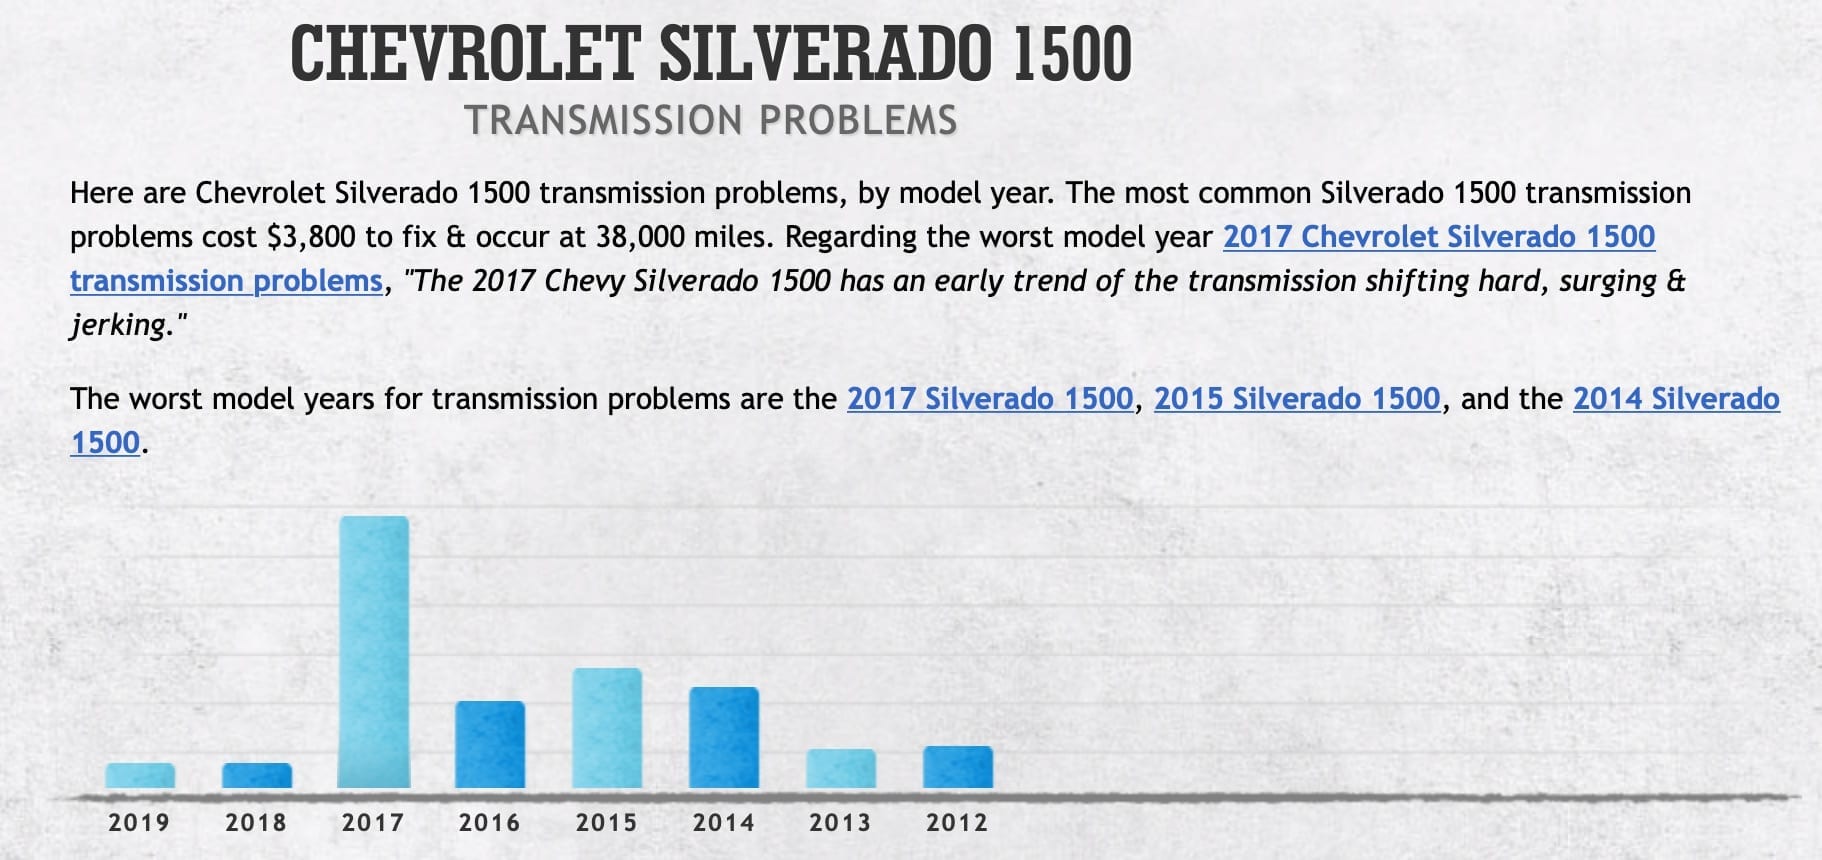 Chevrolet Silverado 1500 Transmission Problems Tips for Prevention